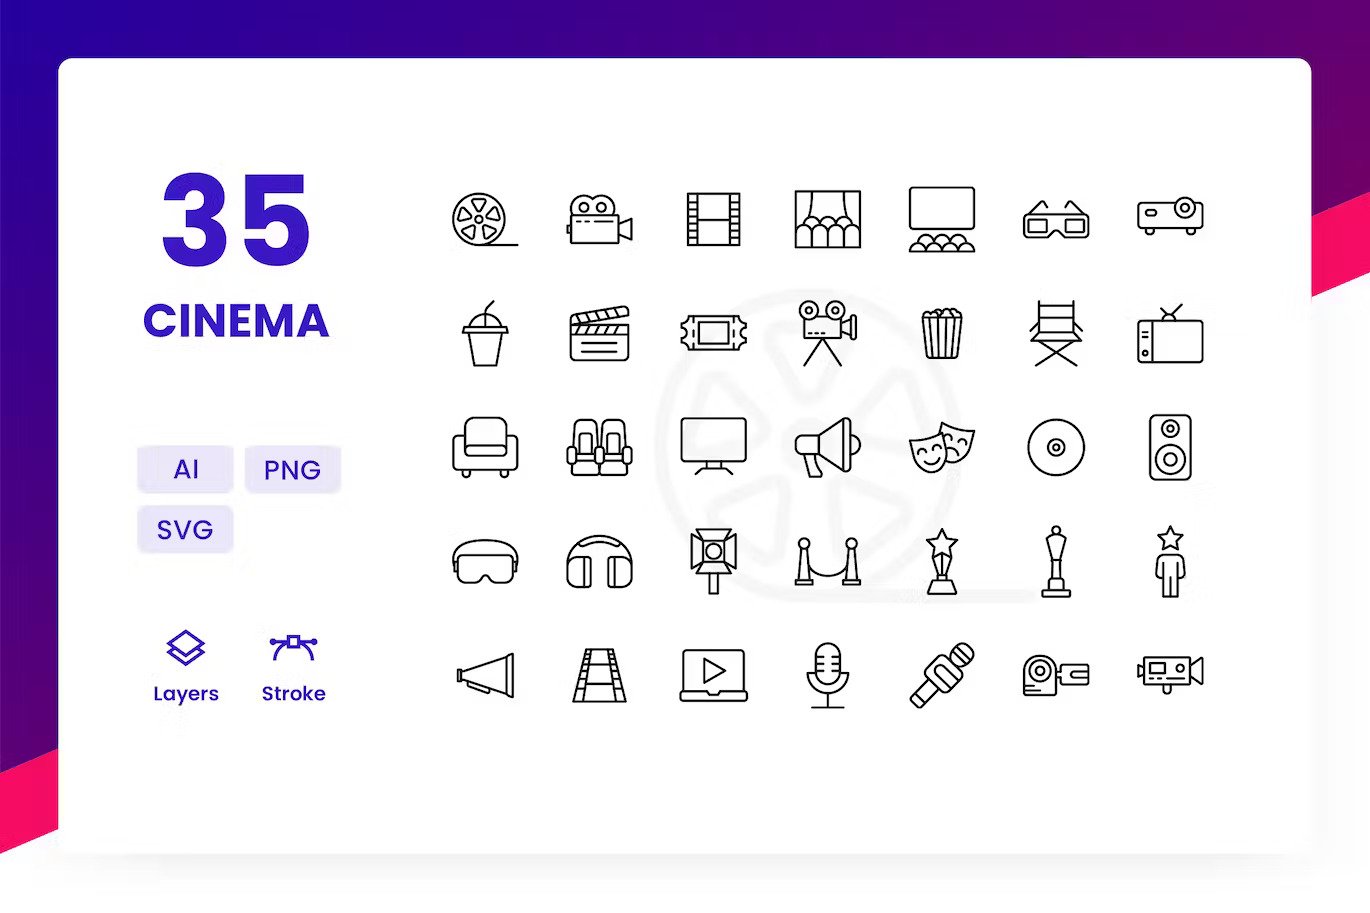 Cinema icons pack